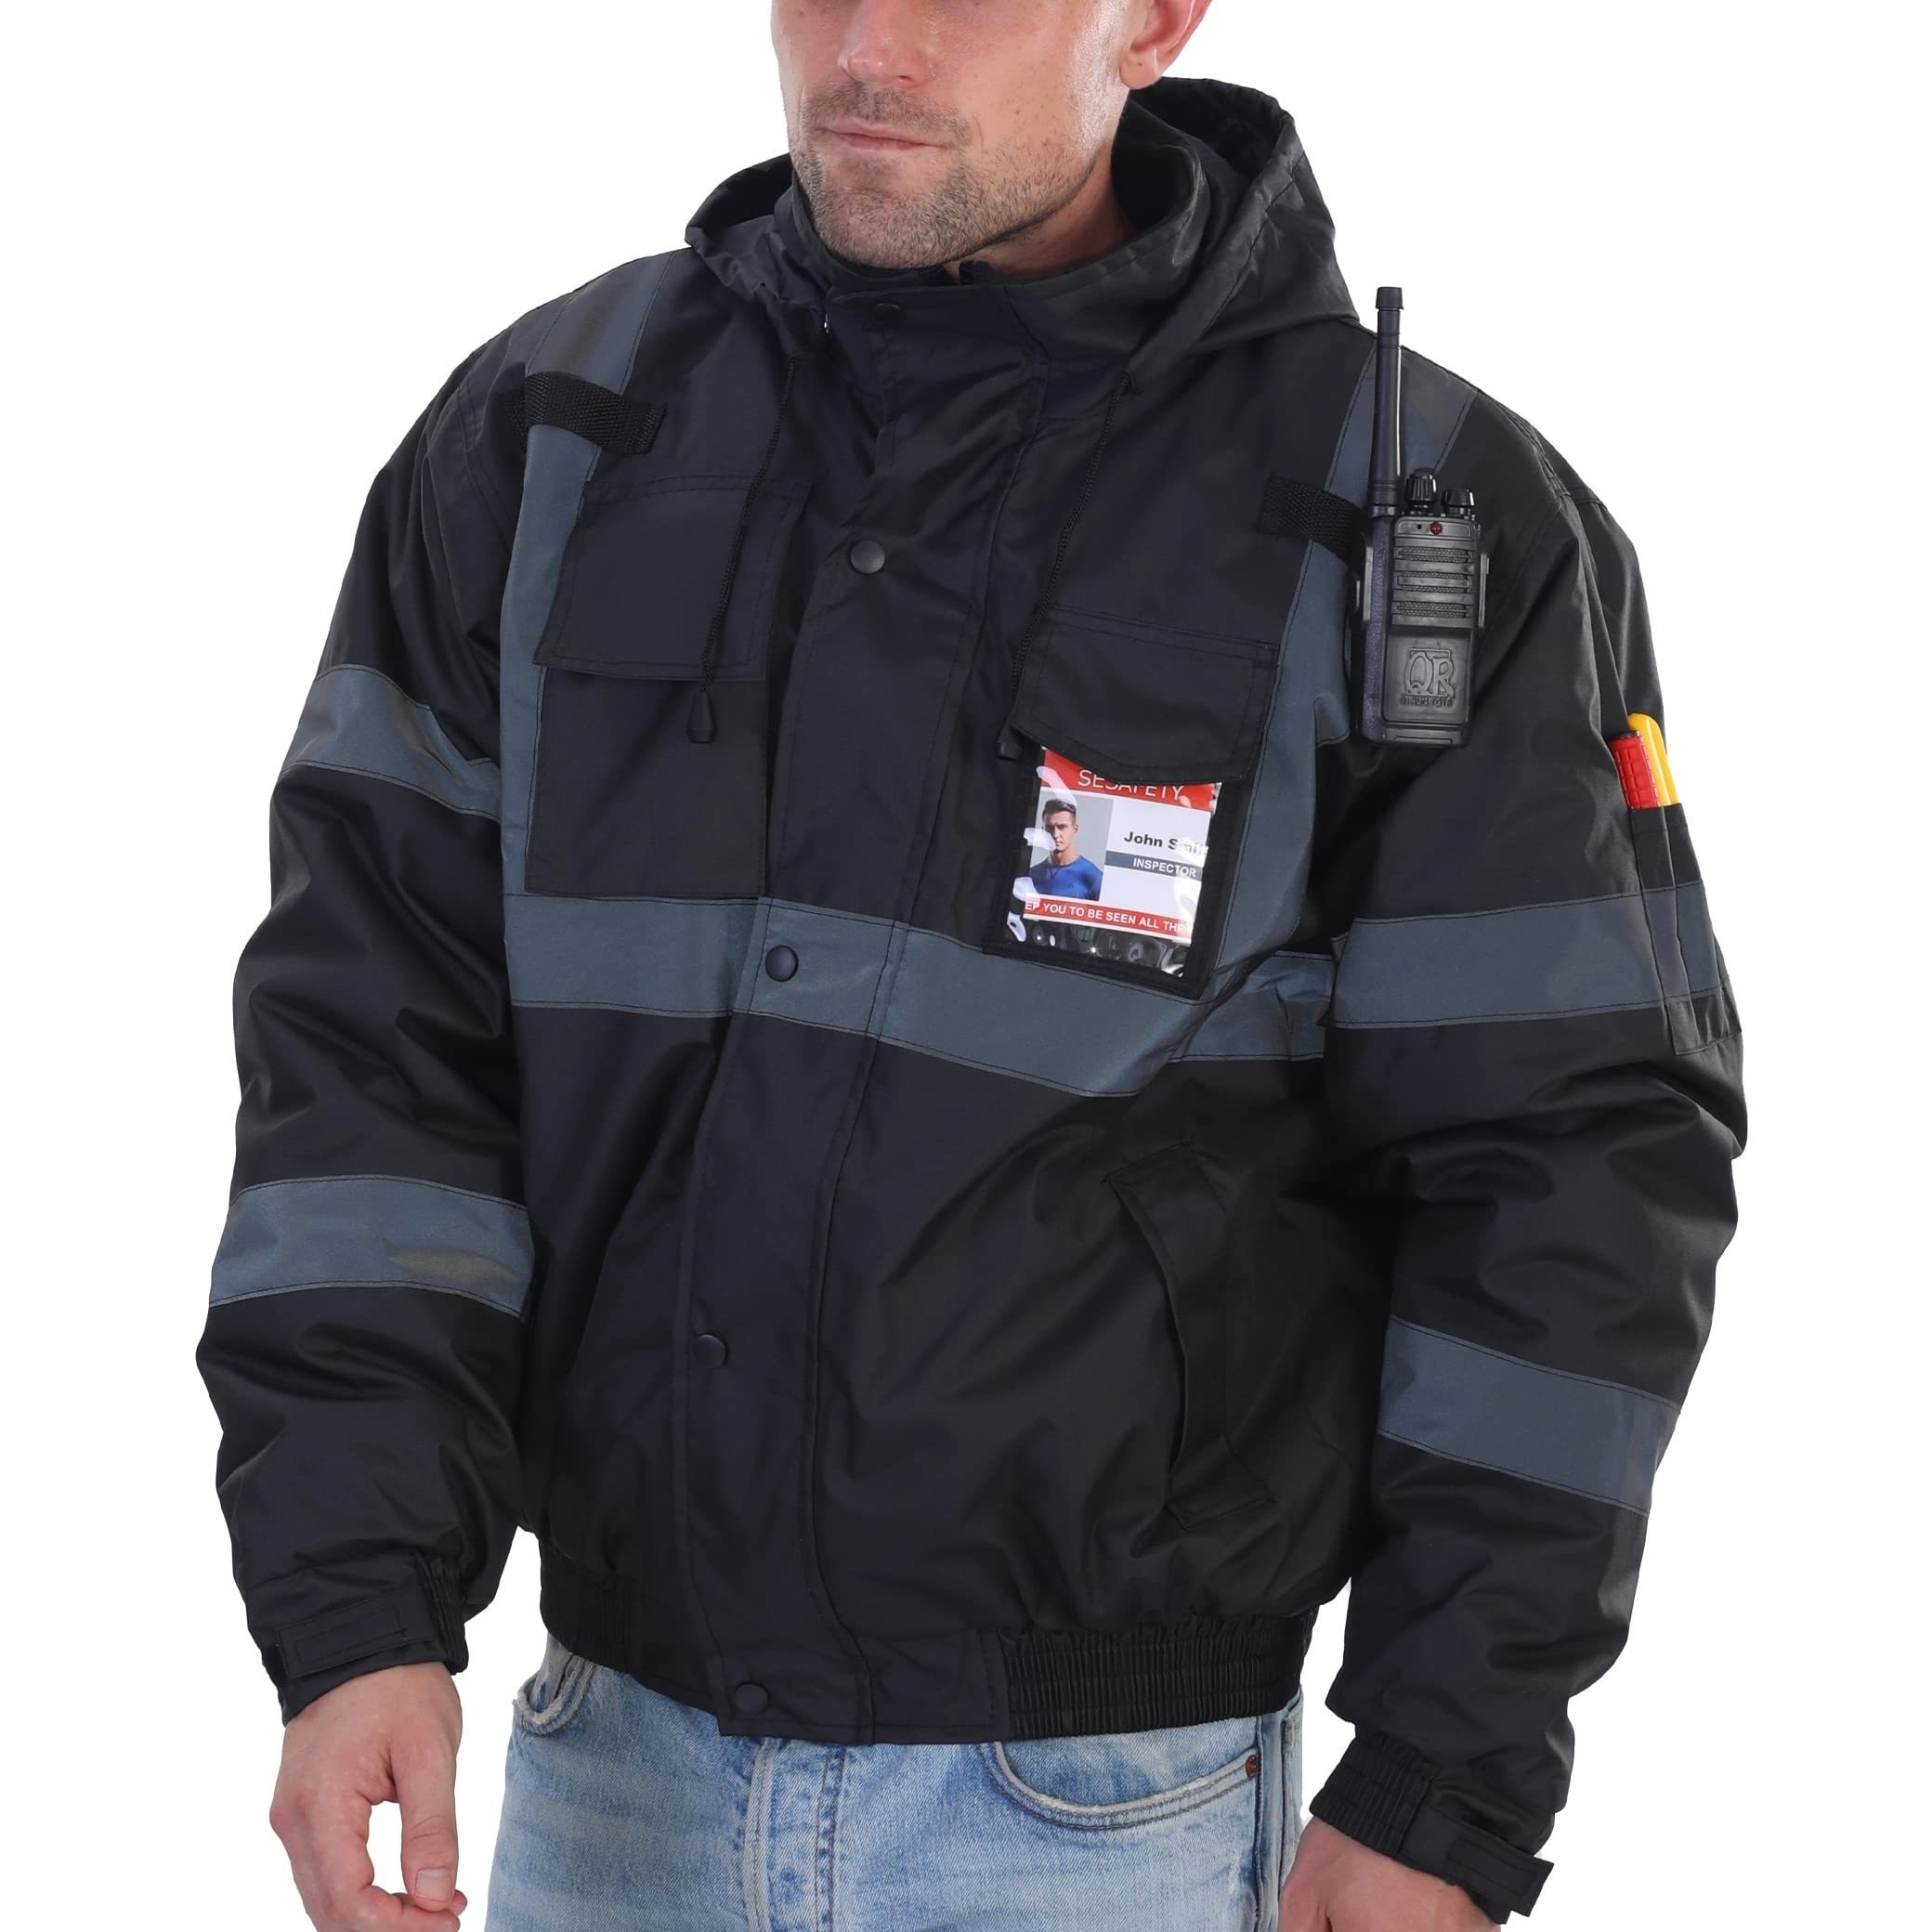 Stay Safe Stylish Multi Pocket Reflective Jacket For Men Women